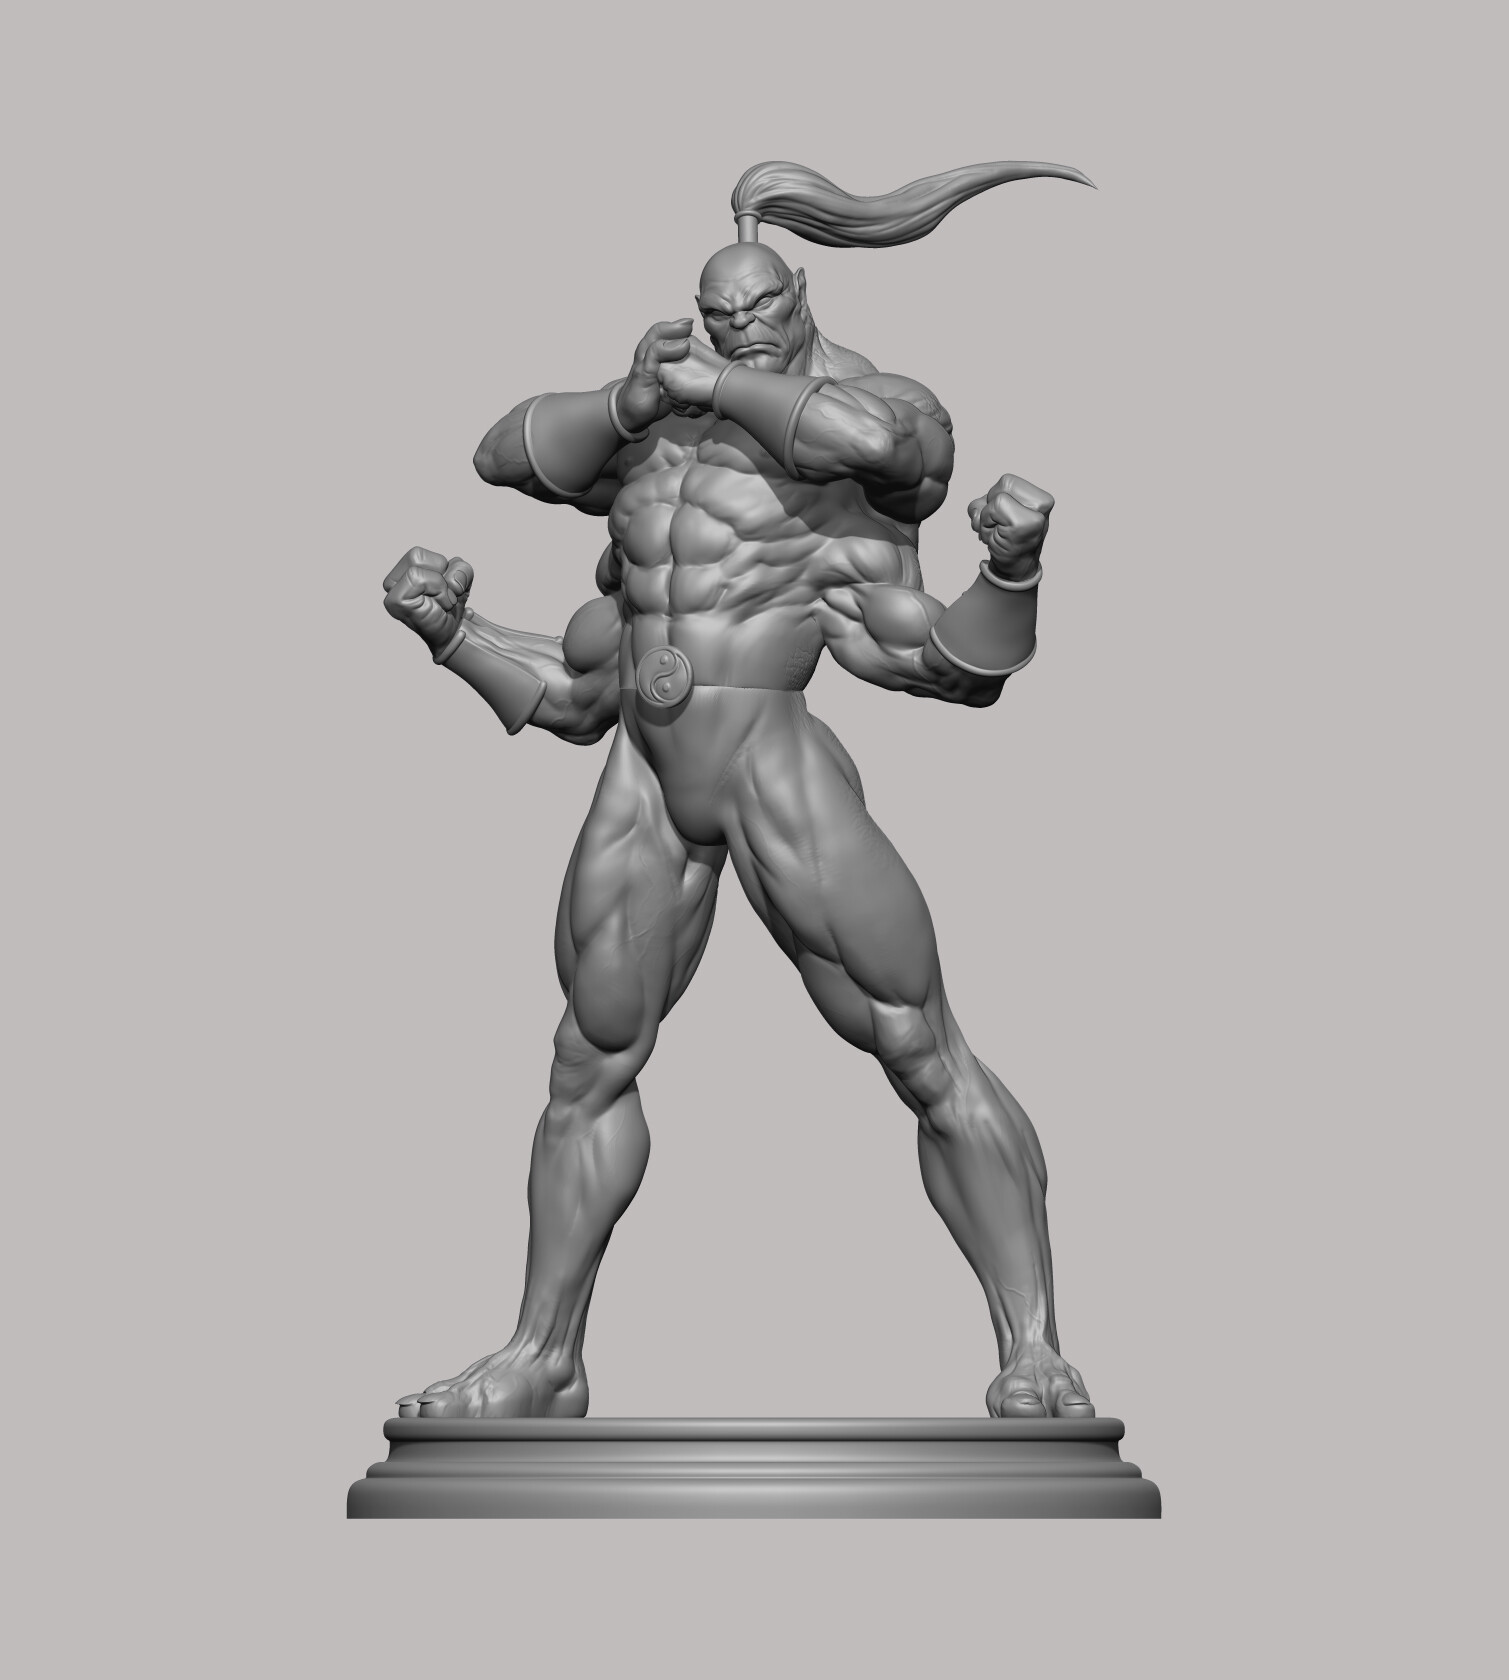 ArtStation - Mortal Combat - Baraka - 1/4th scale statue